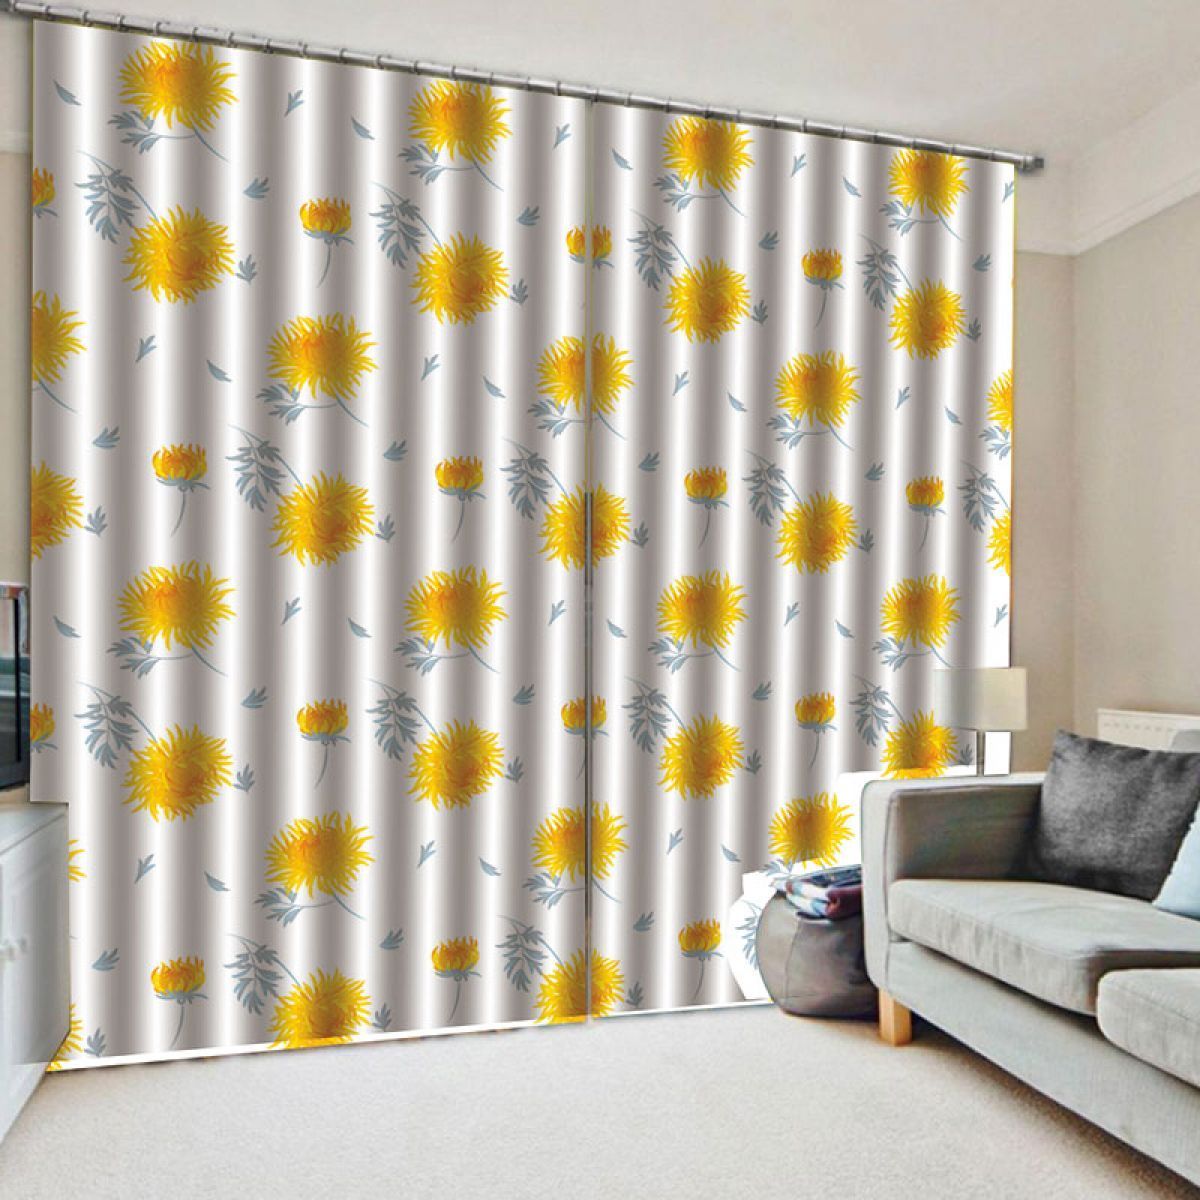 chrysanthemum yellow and white printed window curtain home decor 5278